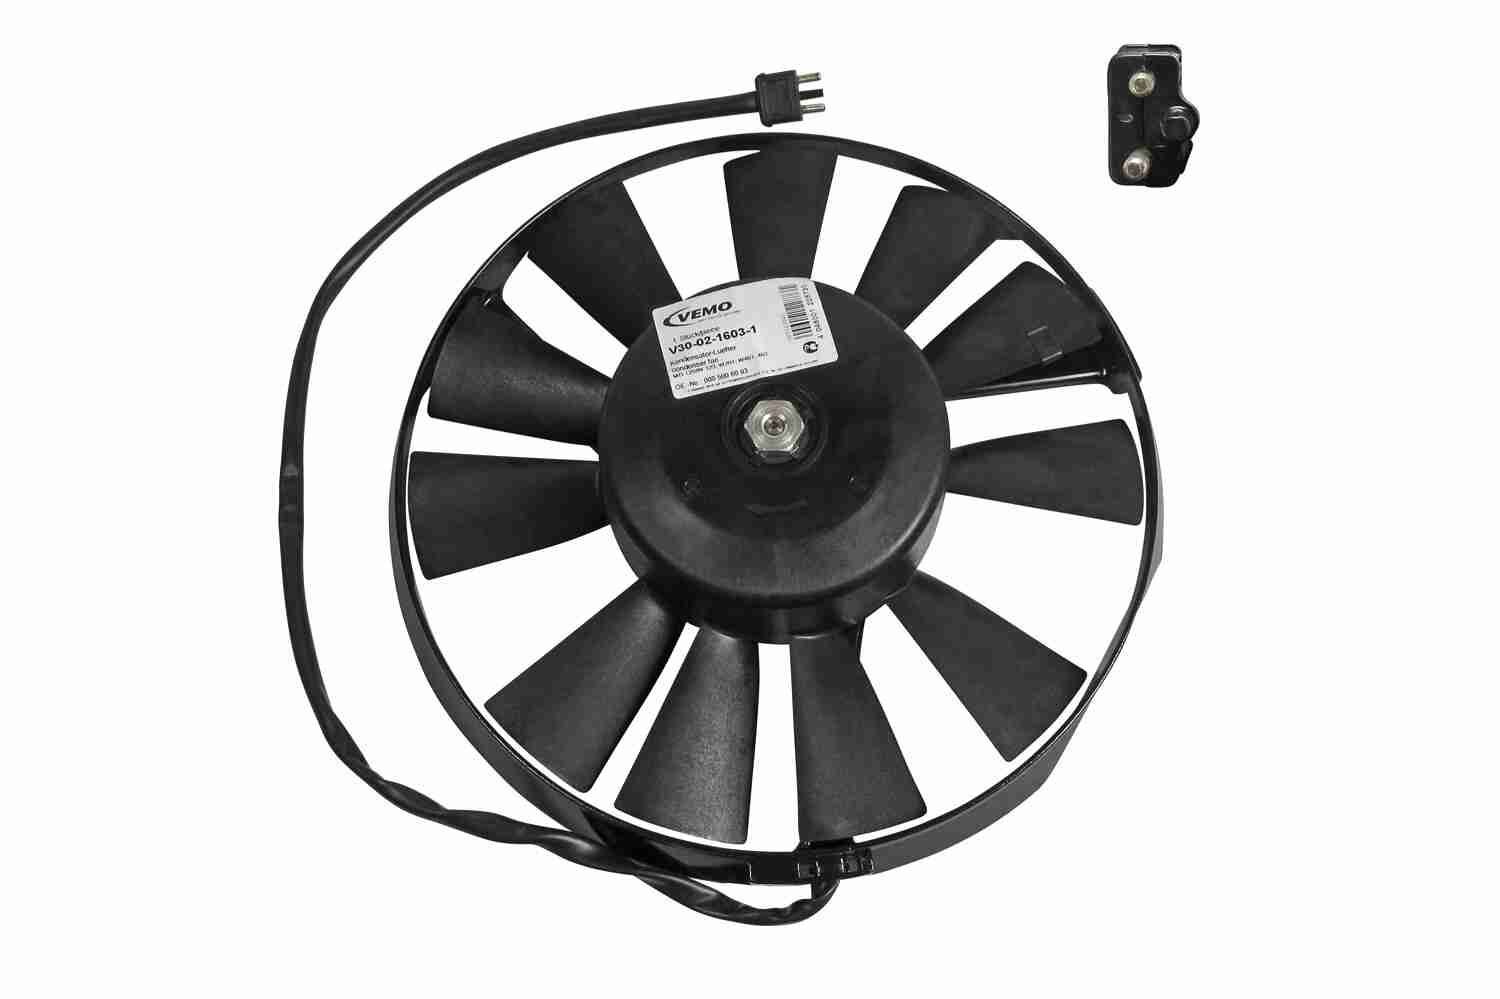 VEMO Q+ original equipment manufacturer quality V30-02-1603-1 Fan, radiator 000 500 60 93